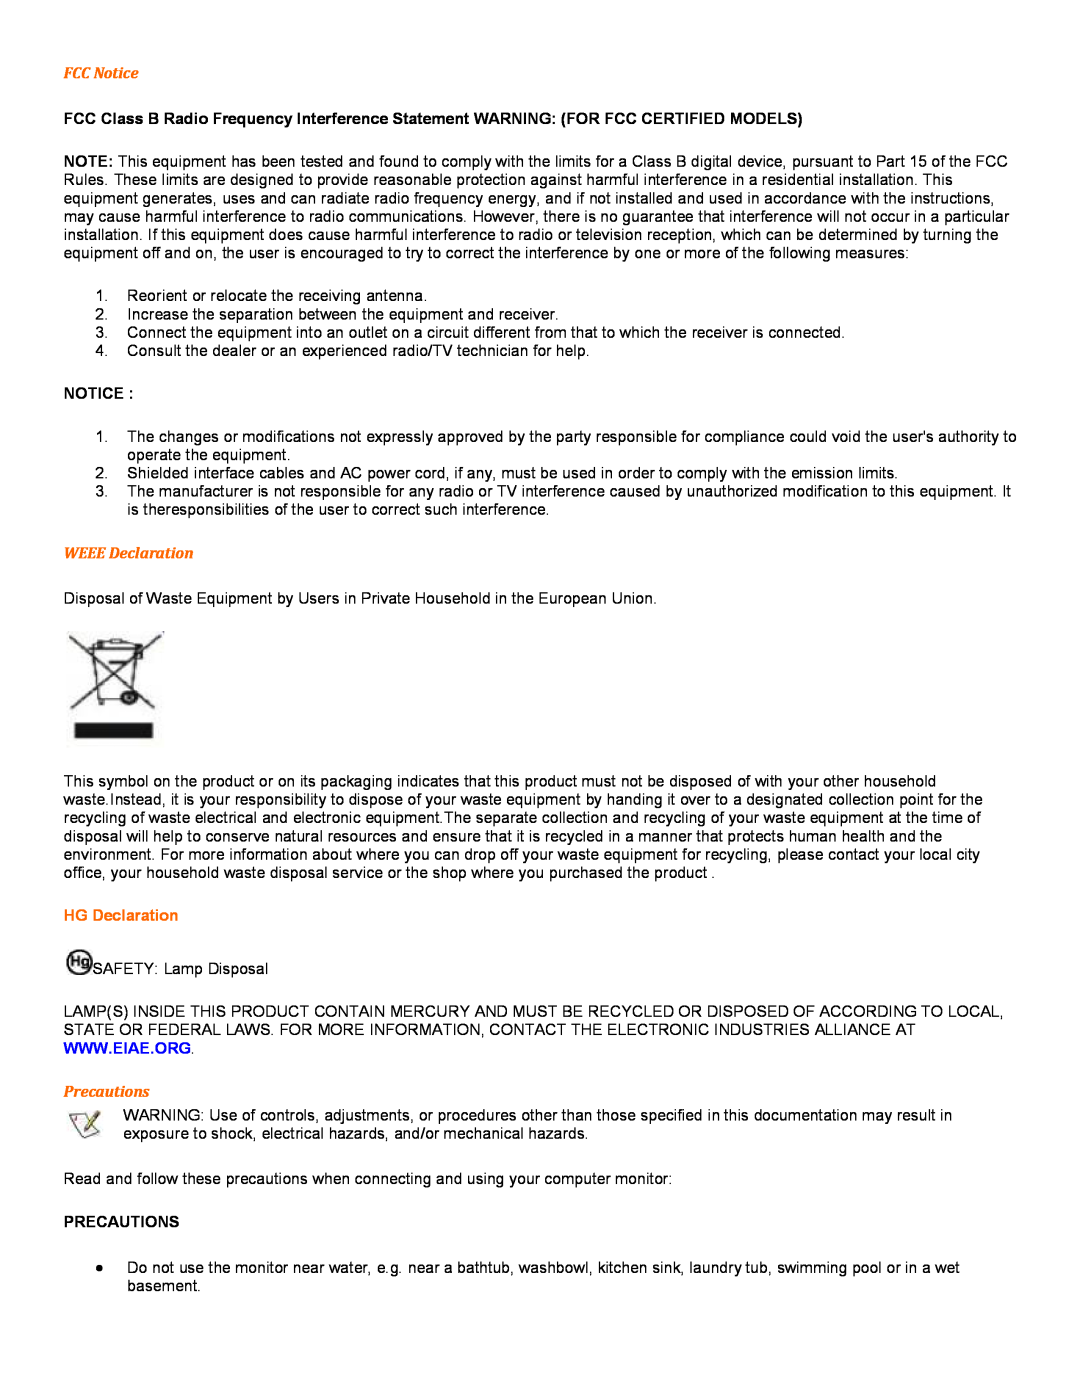 Univex 2217V user manual FCC Notice, WEEE Declaration, HG Declaration, Precautions 